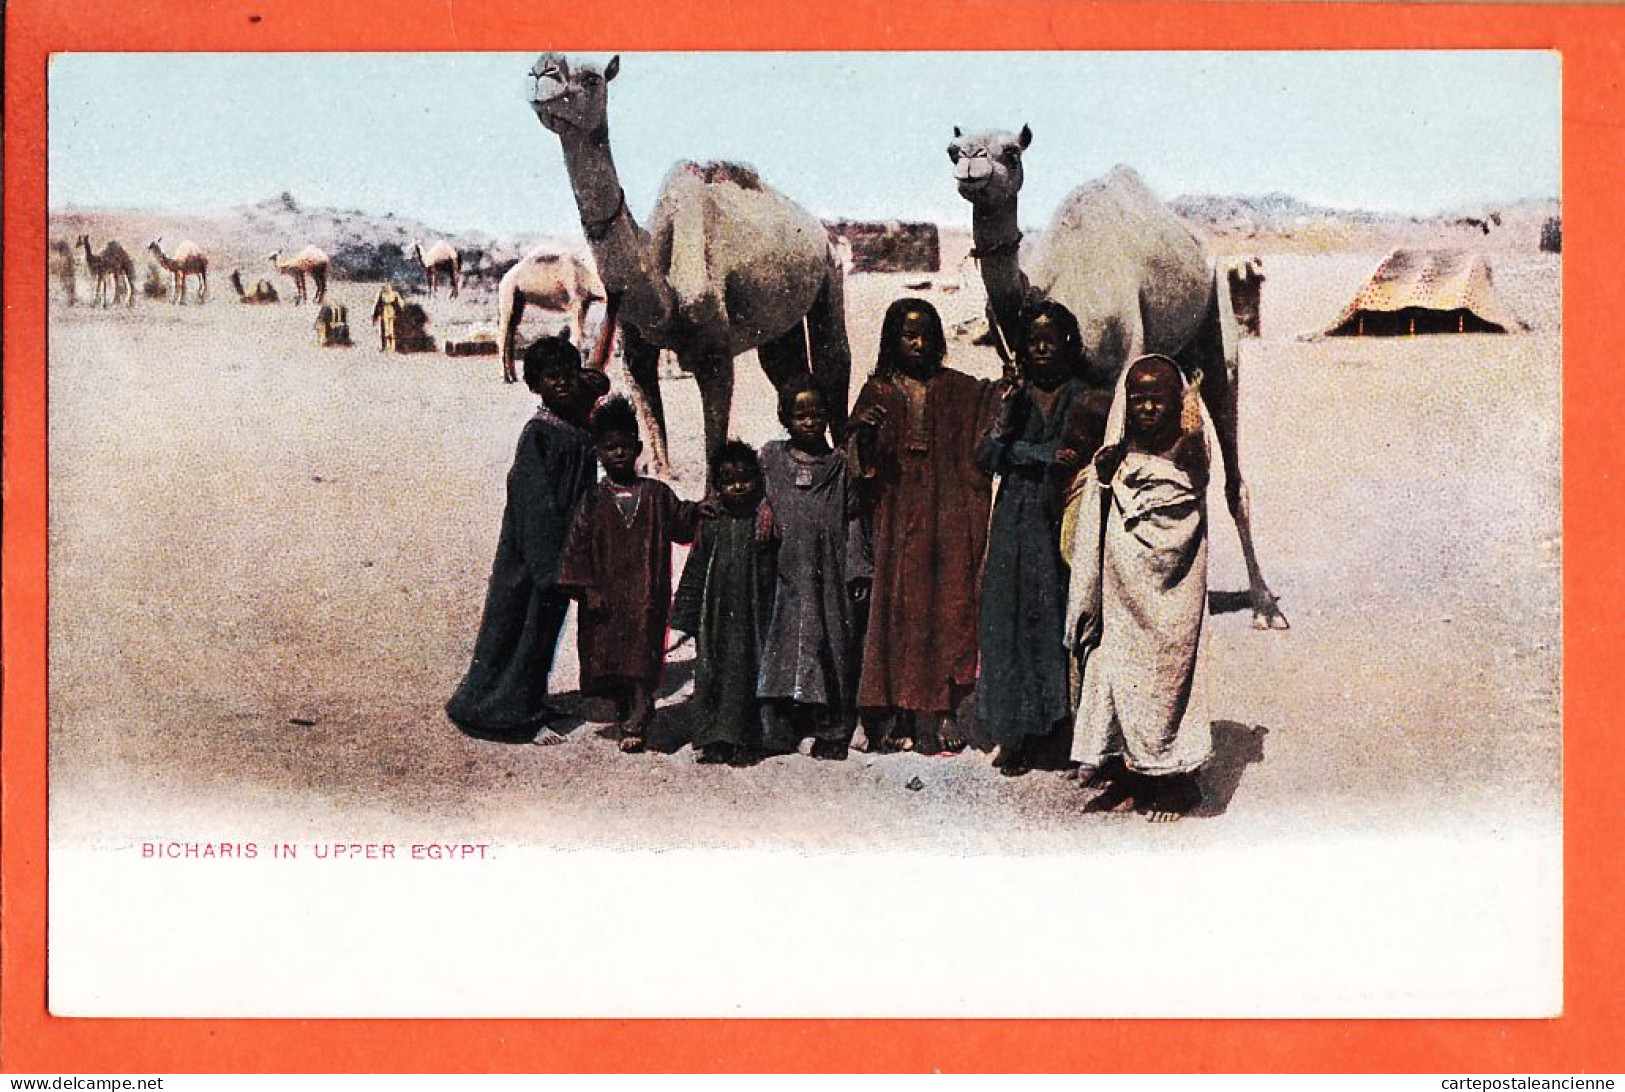 33839 / Ethnic ◉ BICHARIS In Upper EGYPT Tribu BISHARI Haute-Egypte 1900s ◉ LICHTENSTERN-HARARI L & H Cairo 75 - Persons